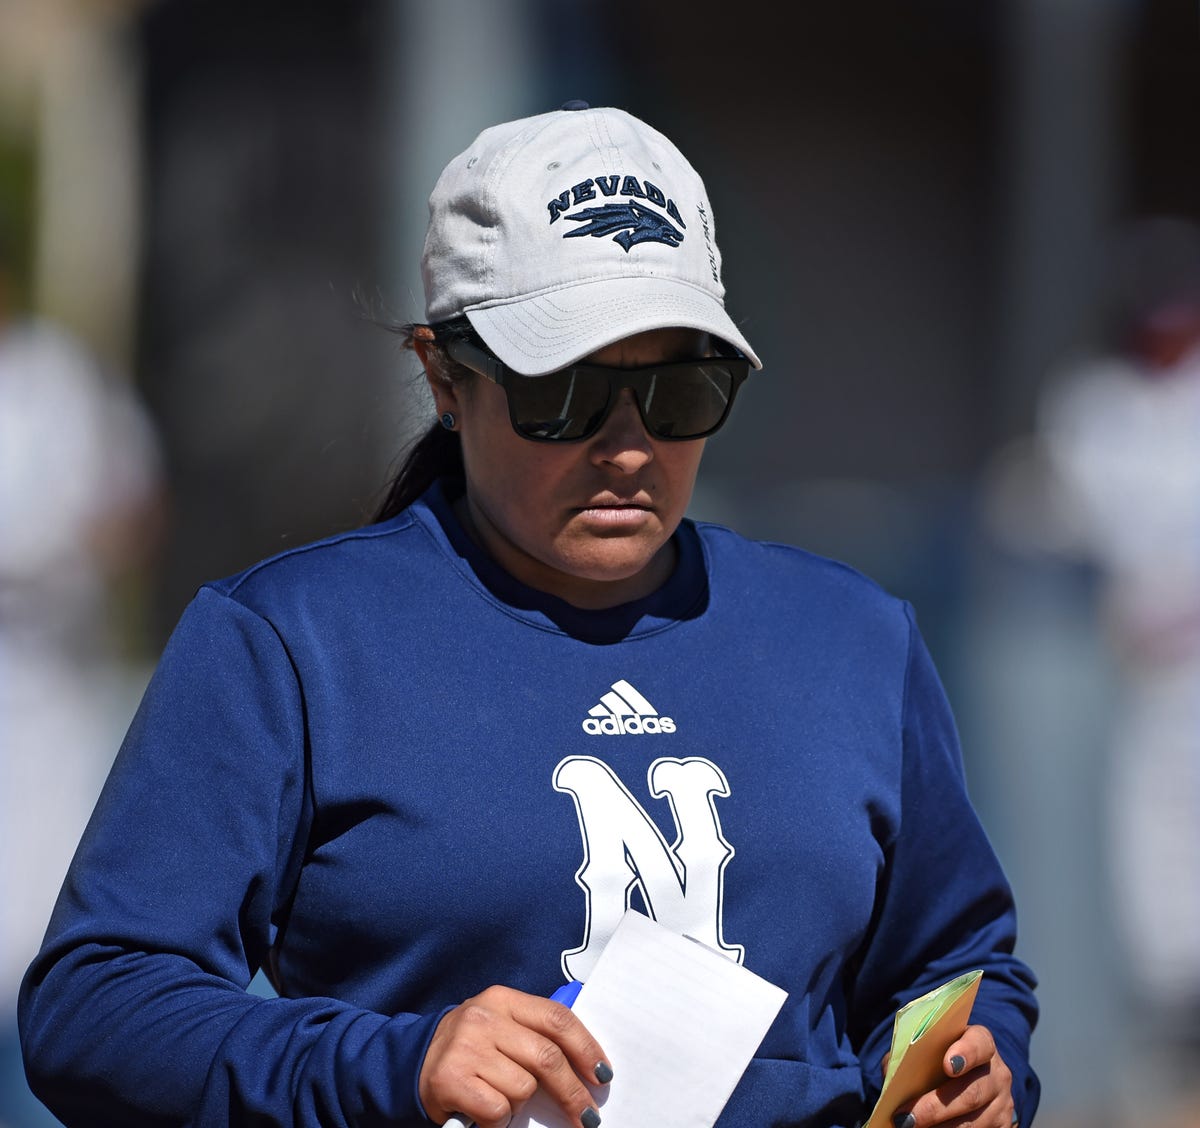 Nevada Softball Coach Linda Garza Resigns After 2 Seasons